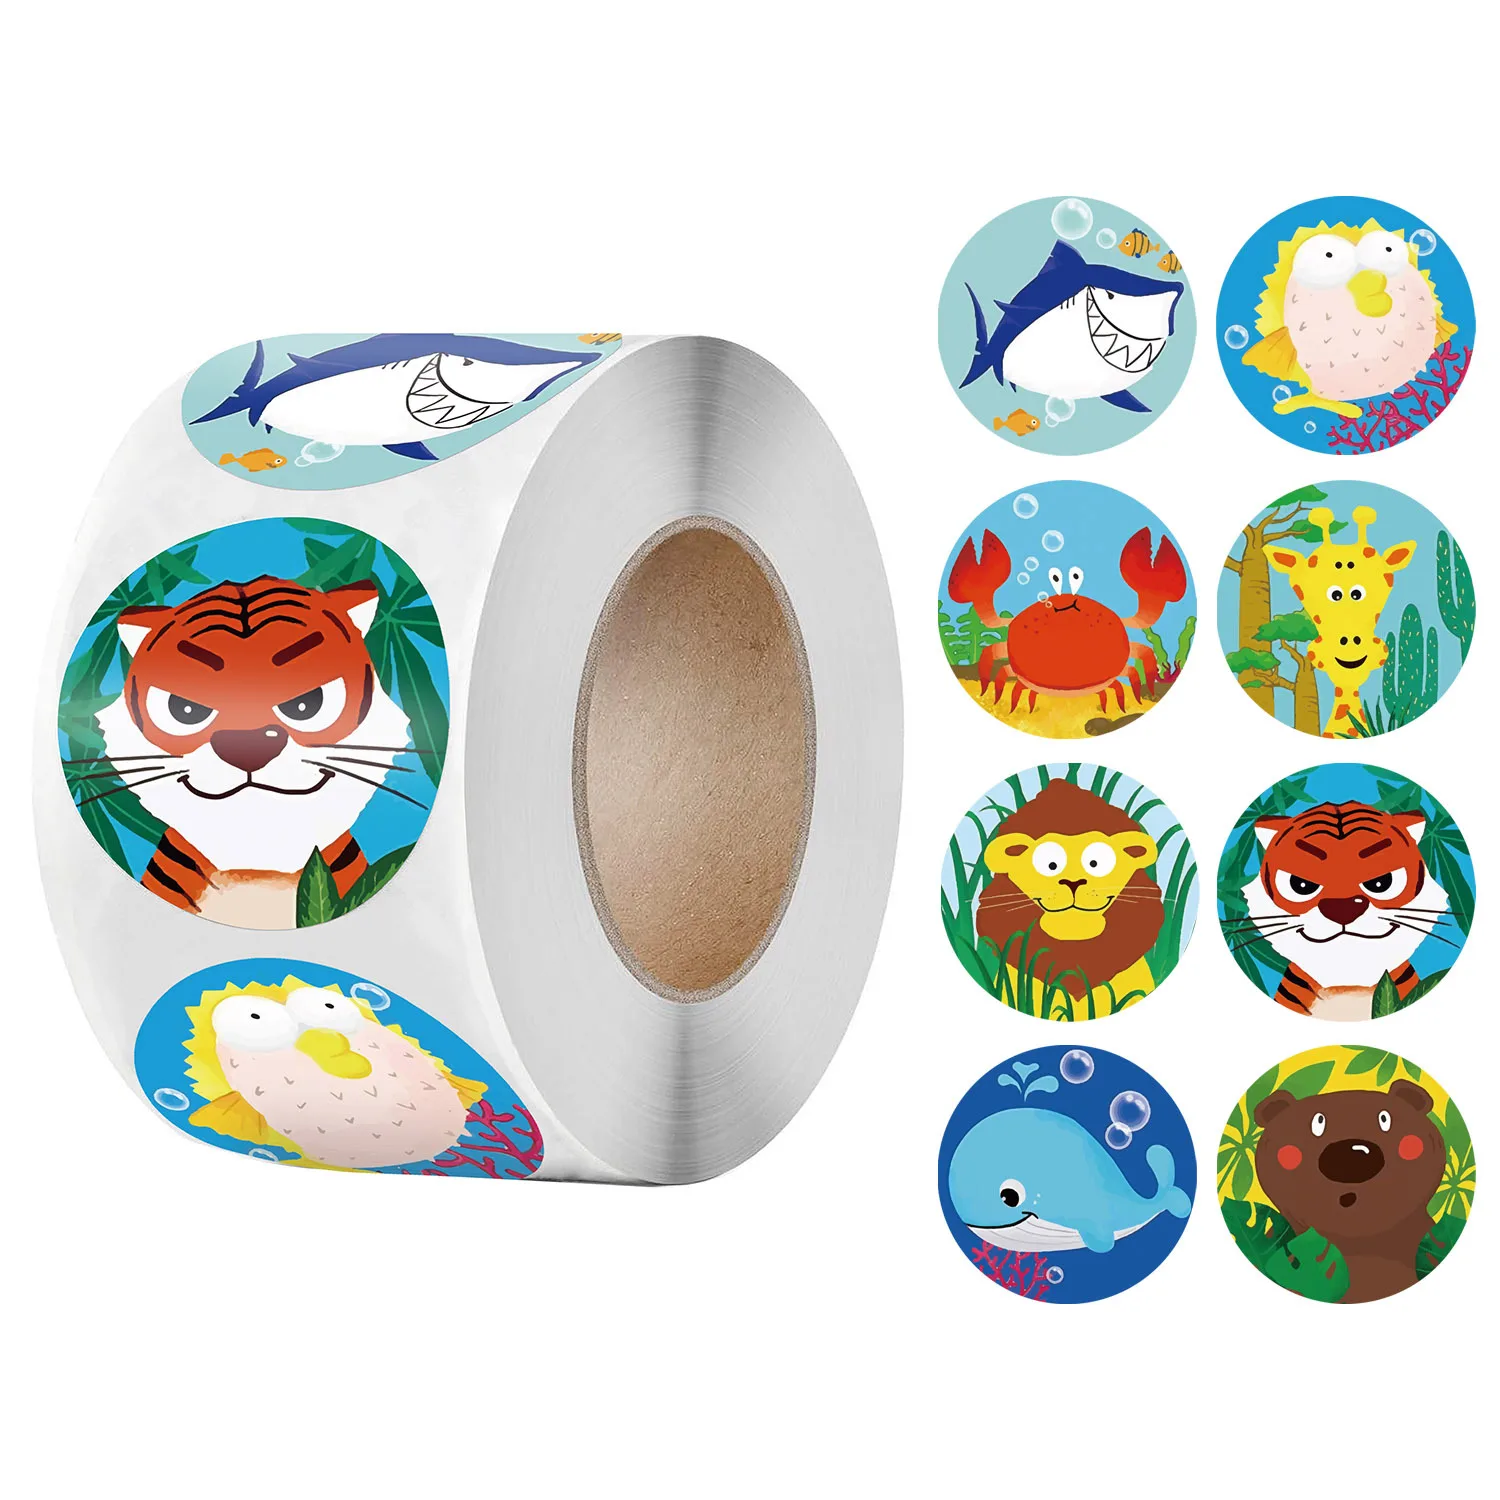 

100-500pcs Animals Cartoon Reward Stickers Cute Encouragement Seal Labels for School Teacher Gift Decortion Kids Toys 1inch